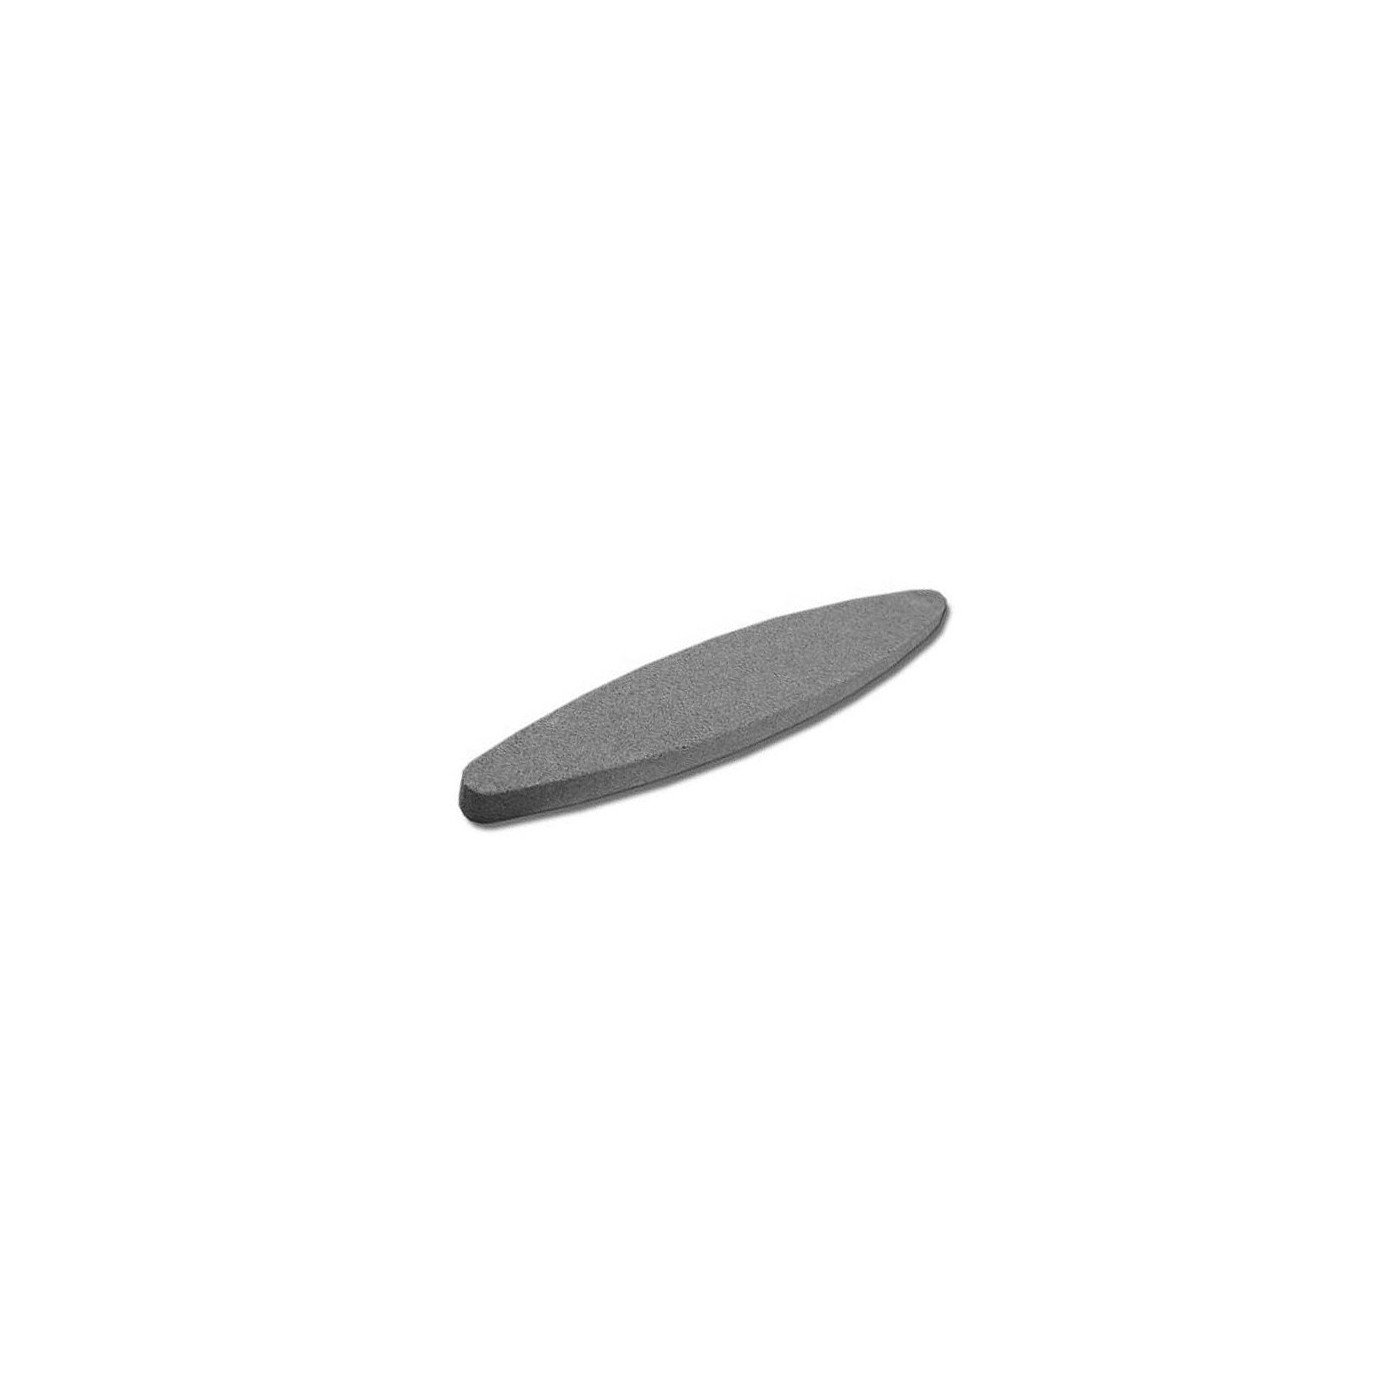 Piedra de afilar, piedra de amolar, ovalada, 225 mm de longitud